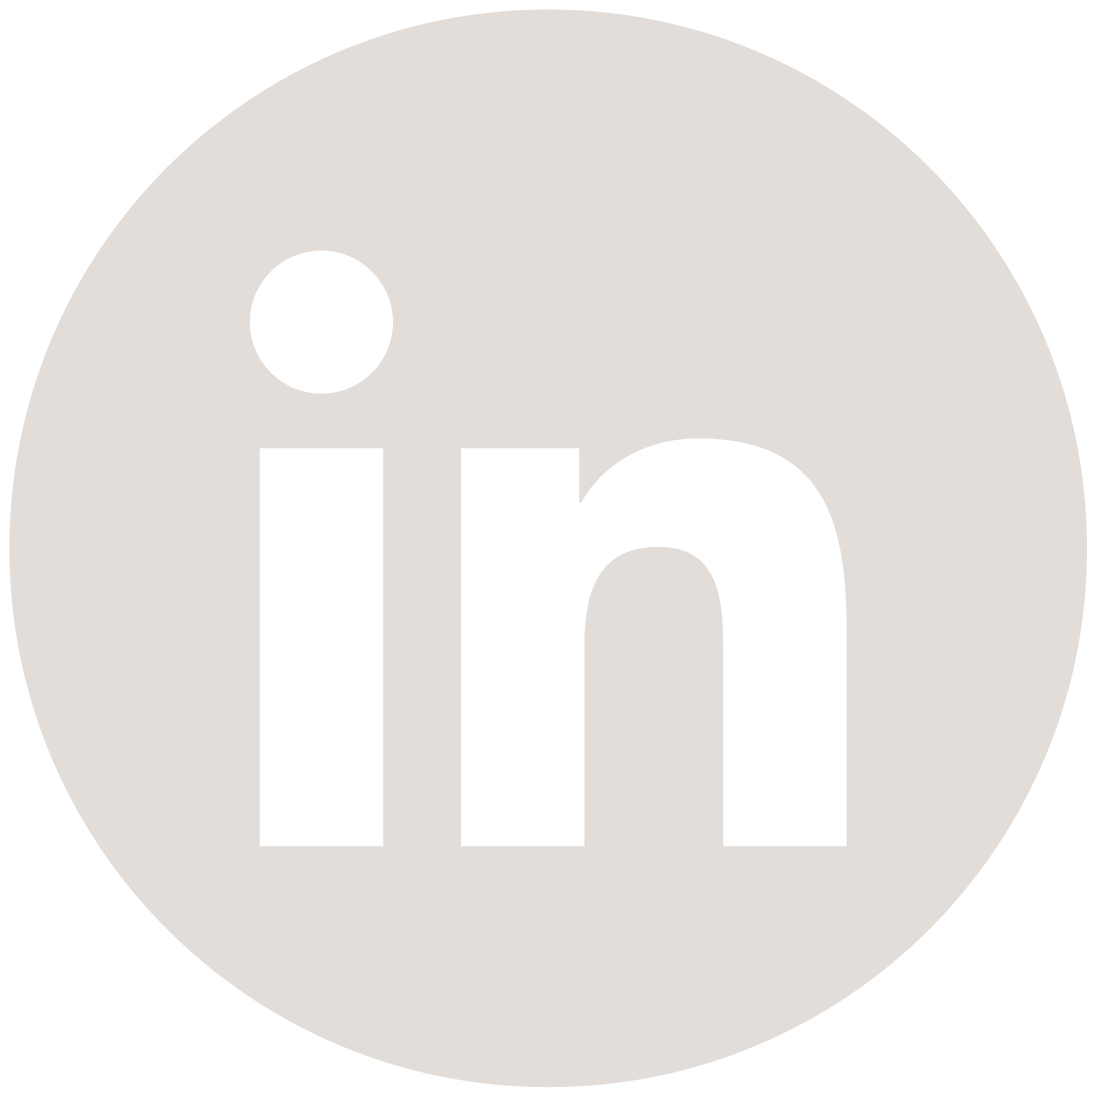 linkedin icon button